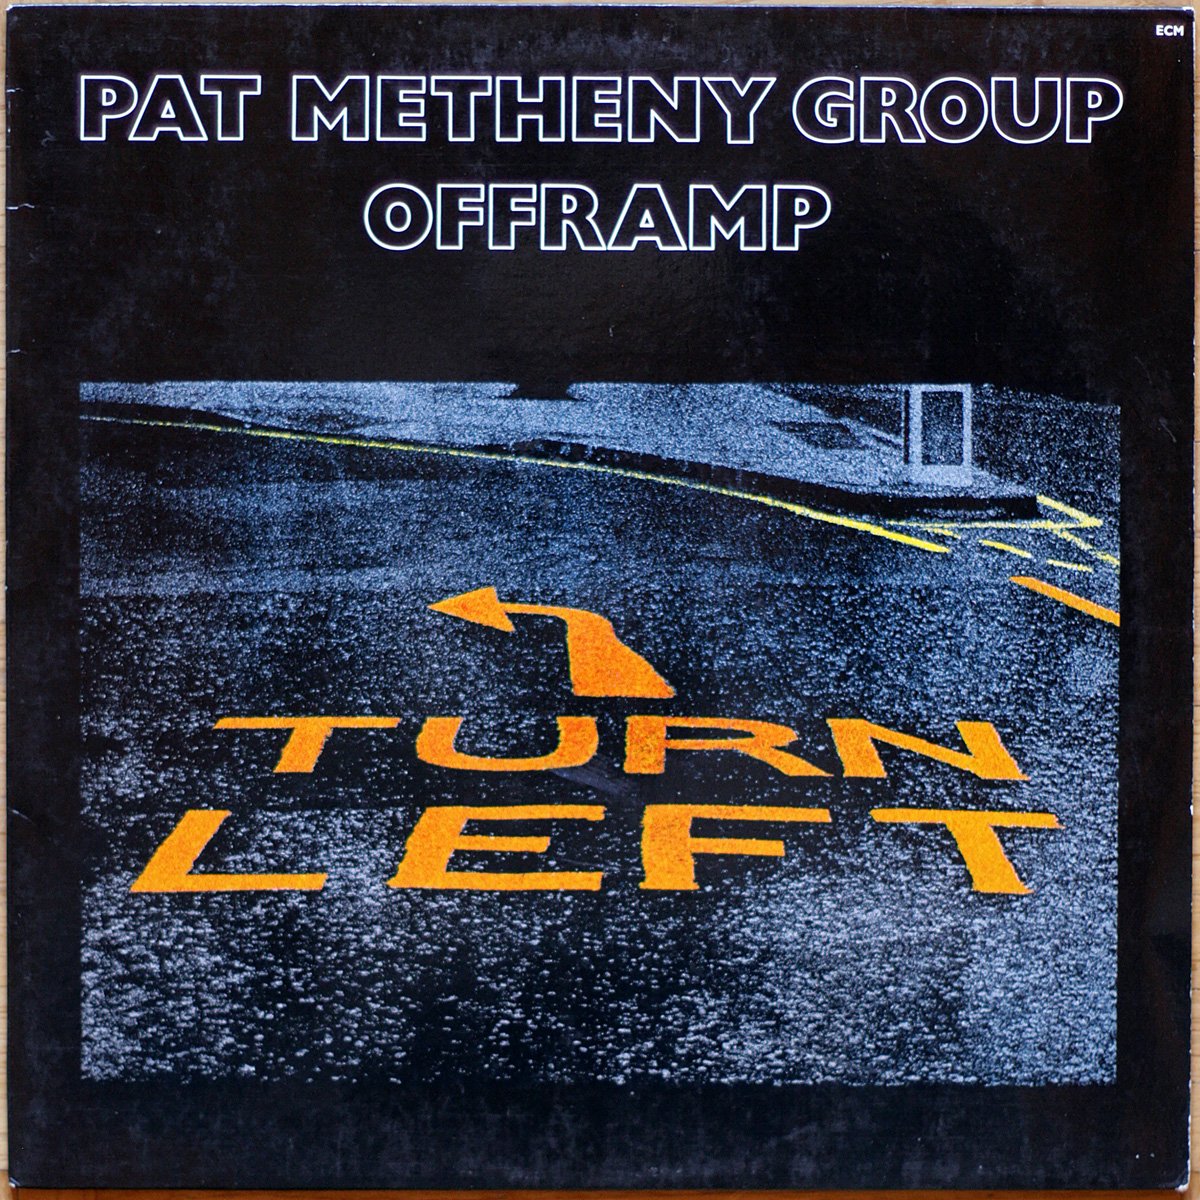 Pat Metheny Group • Offramp • ECM 1216/2301 216 • Pat Metheny • Danny Gottlieb • Nana Vasconcelos • Lyle Mays • Steve Rodby